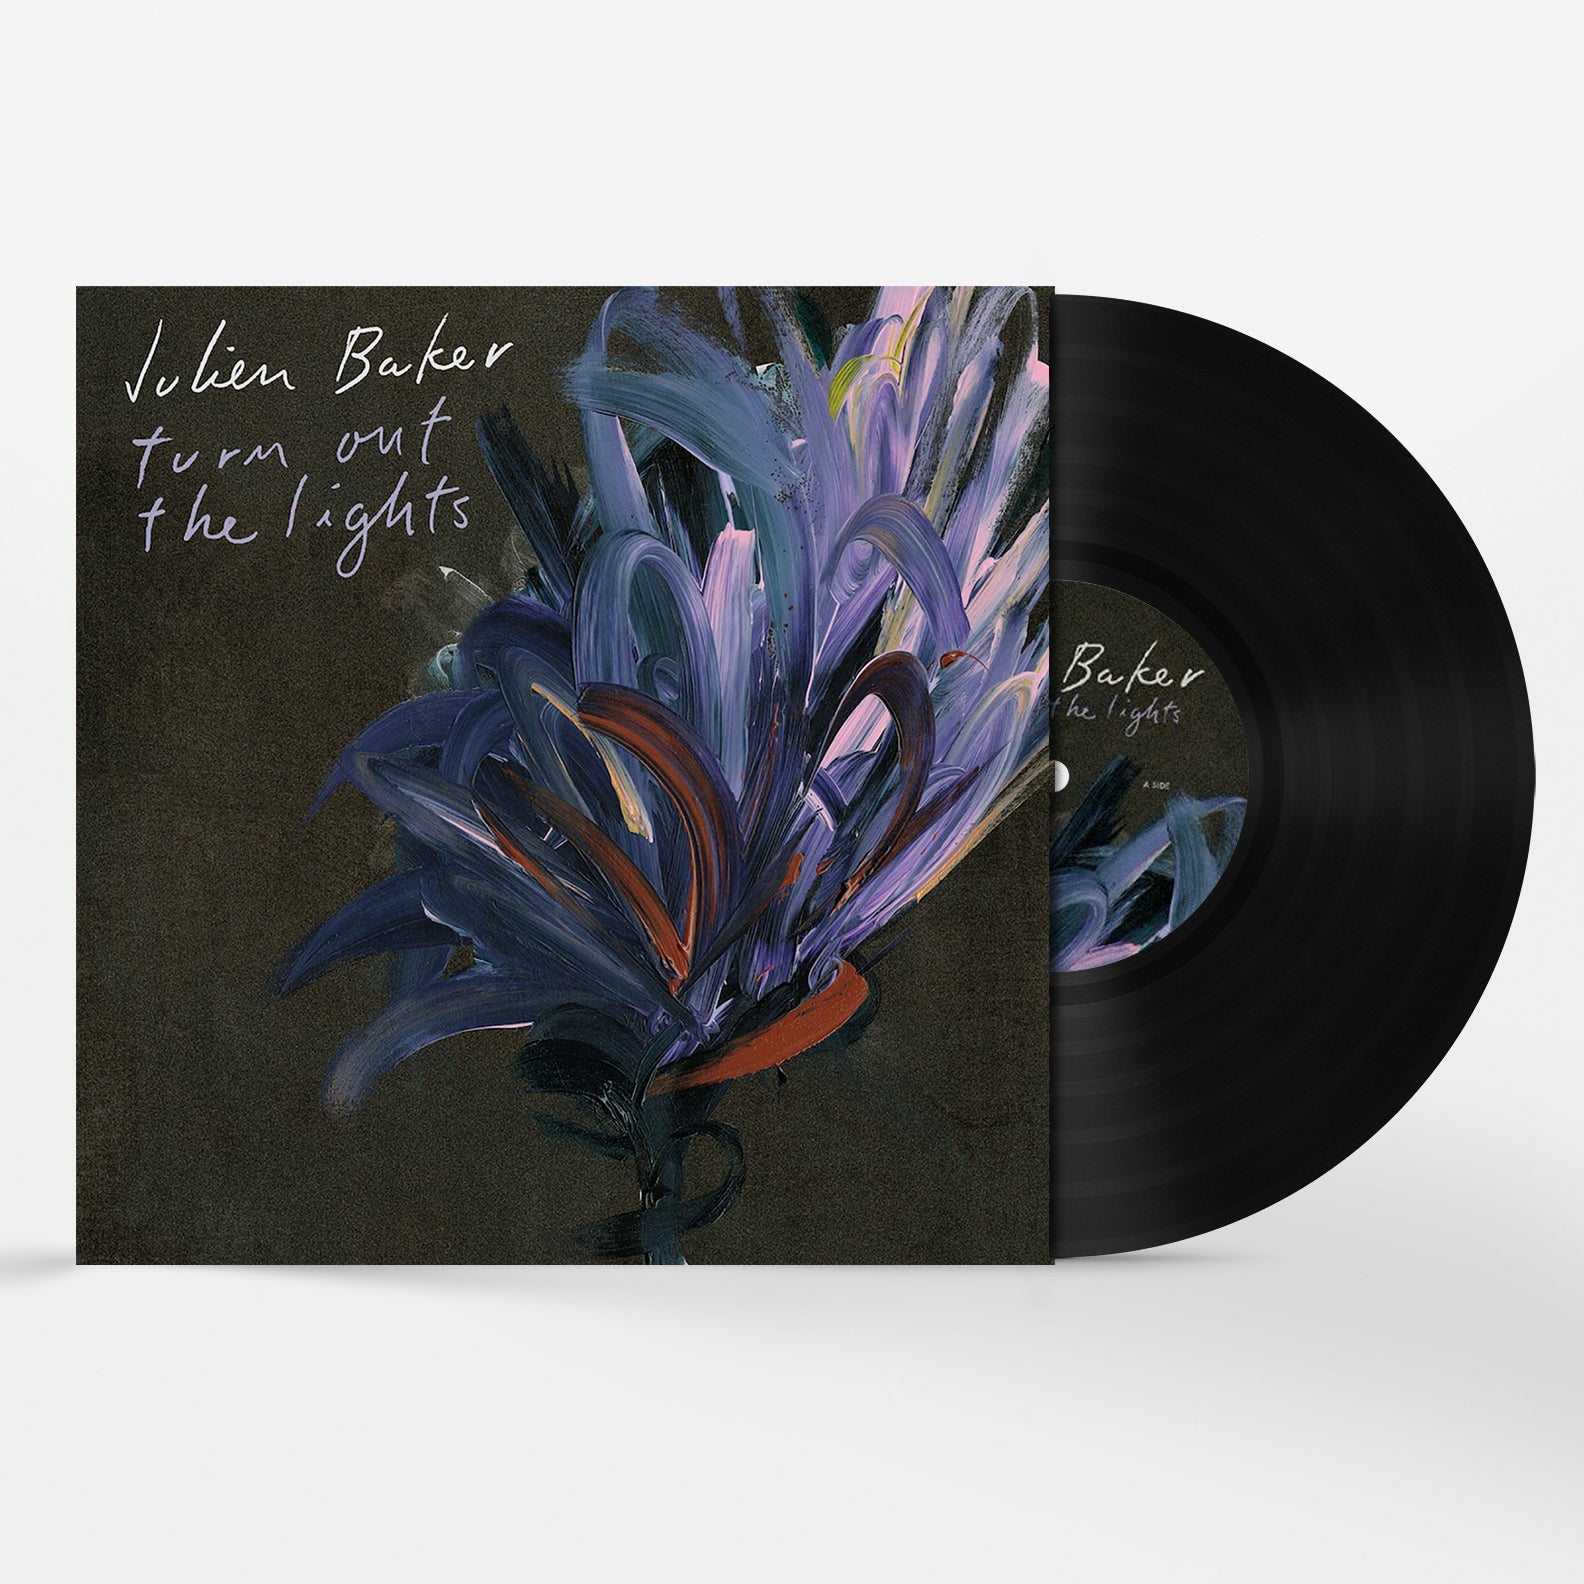 Julien Baker: Turn Out The Lights Vinyl LP